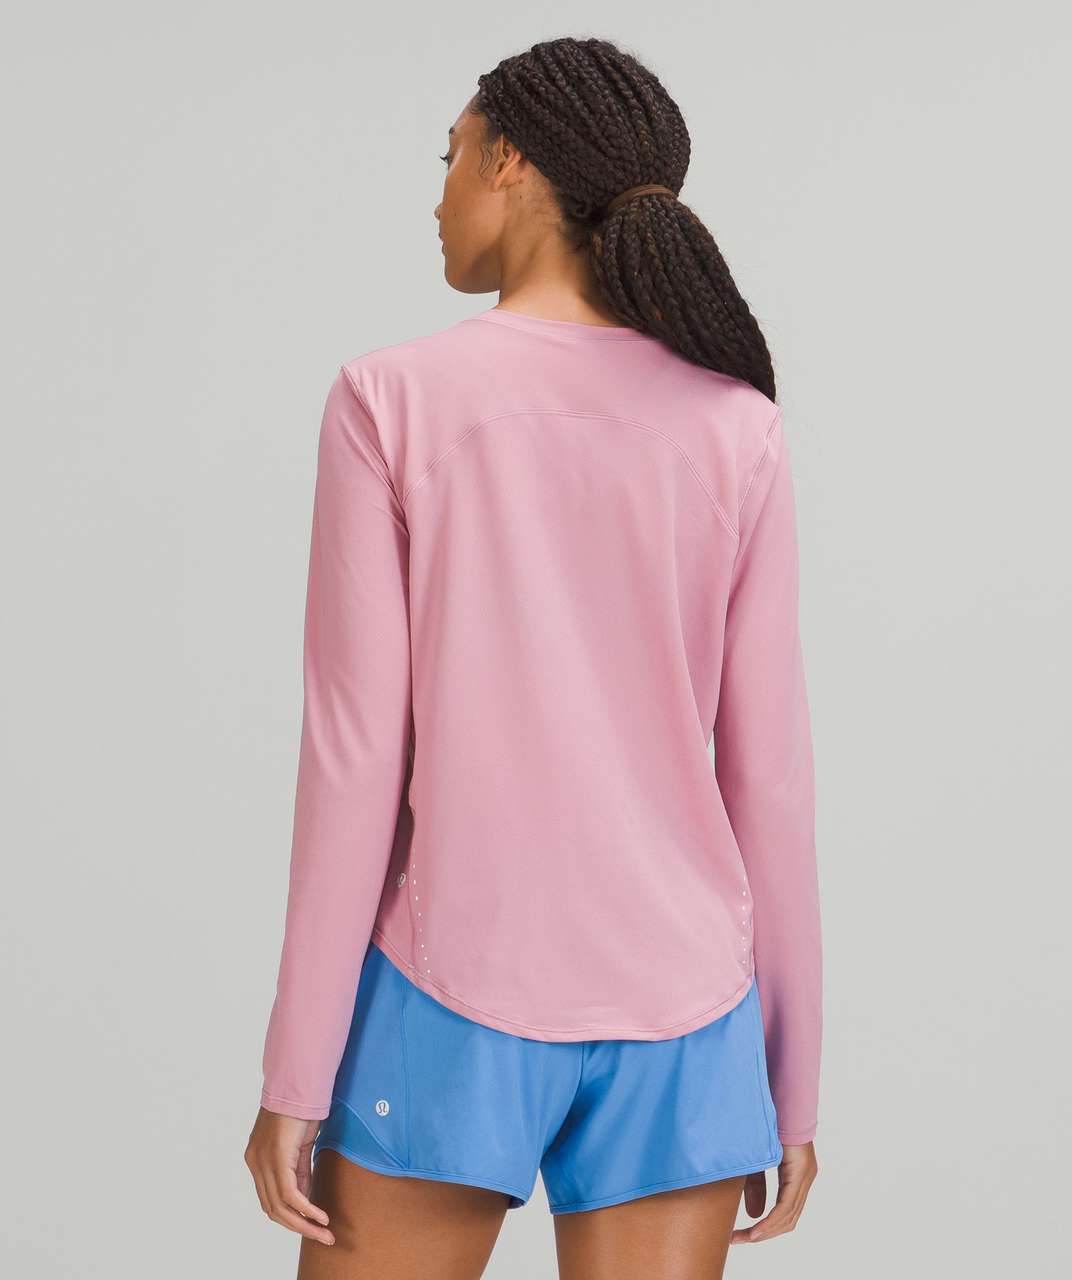 Lululemon High Neck Running and Training Long Sleeve Shirt - Pink Taupe